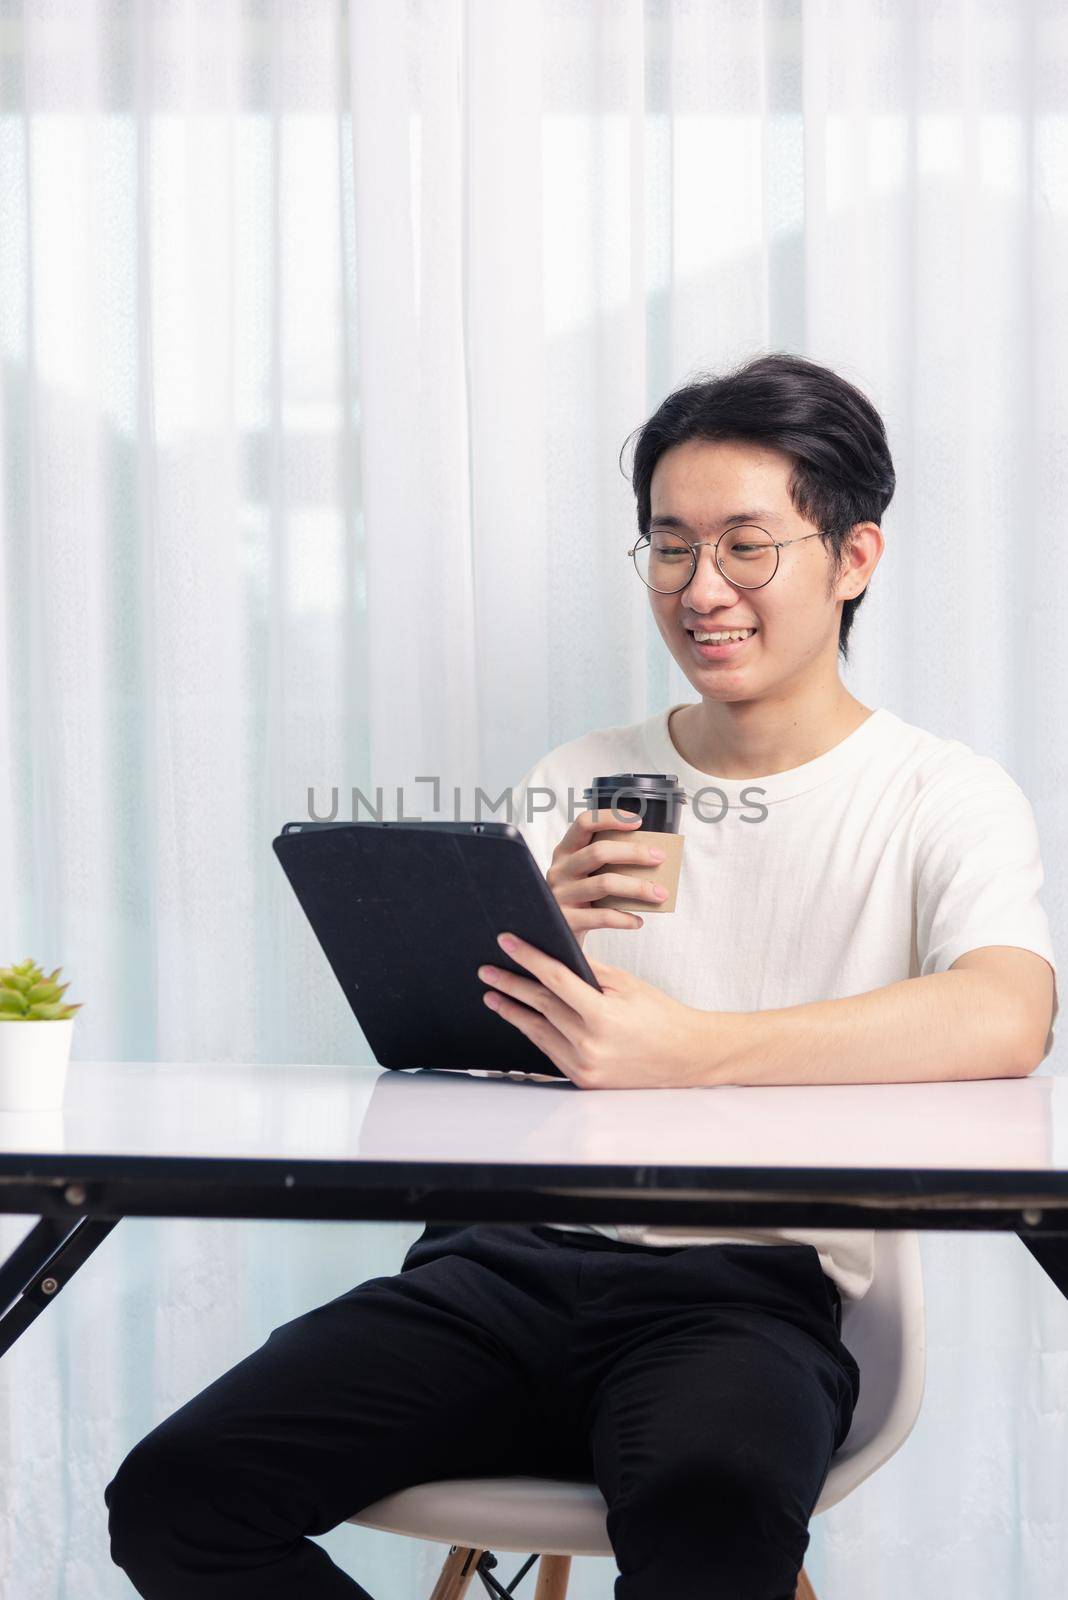 Business man work from home office he using a black modern smart digital tablet computer by Sorapop